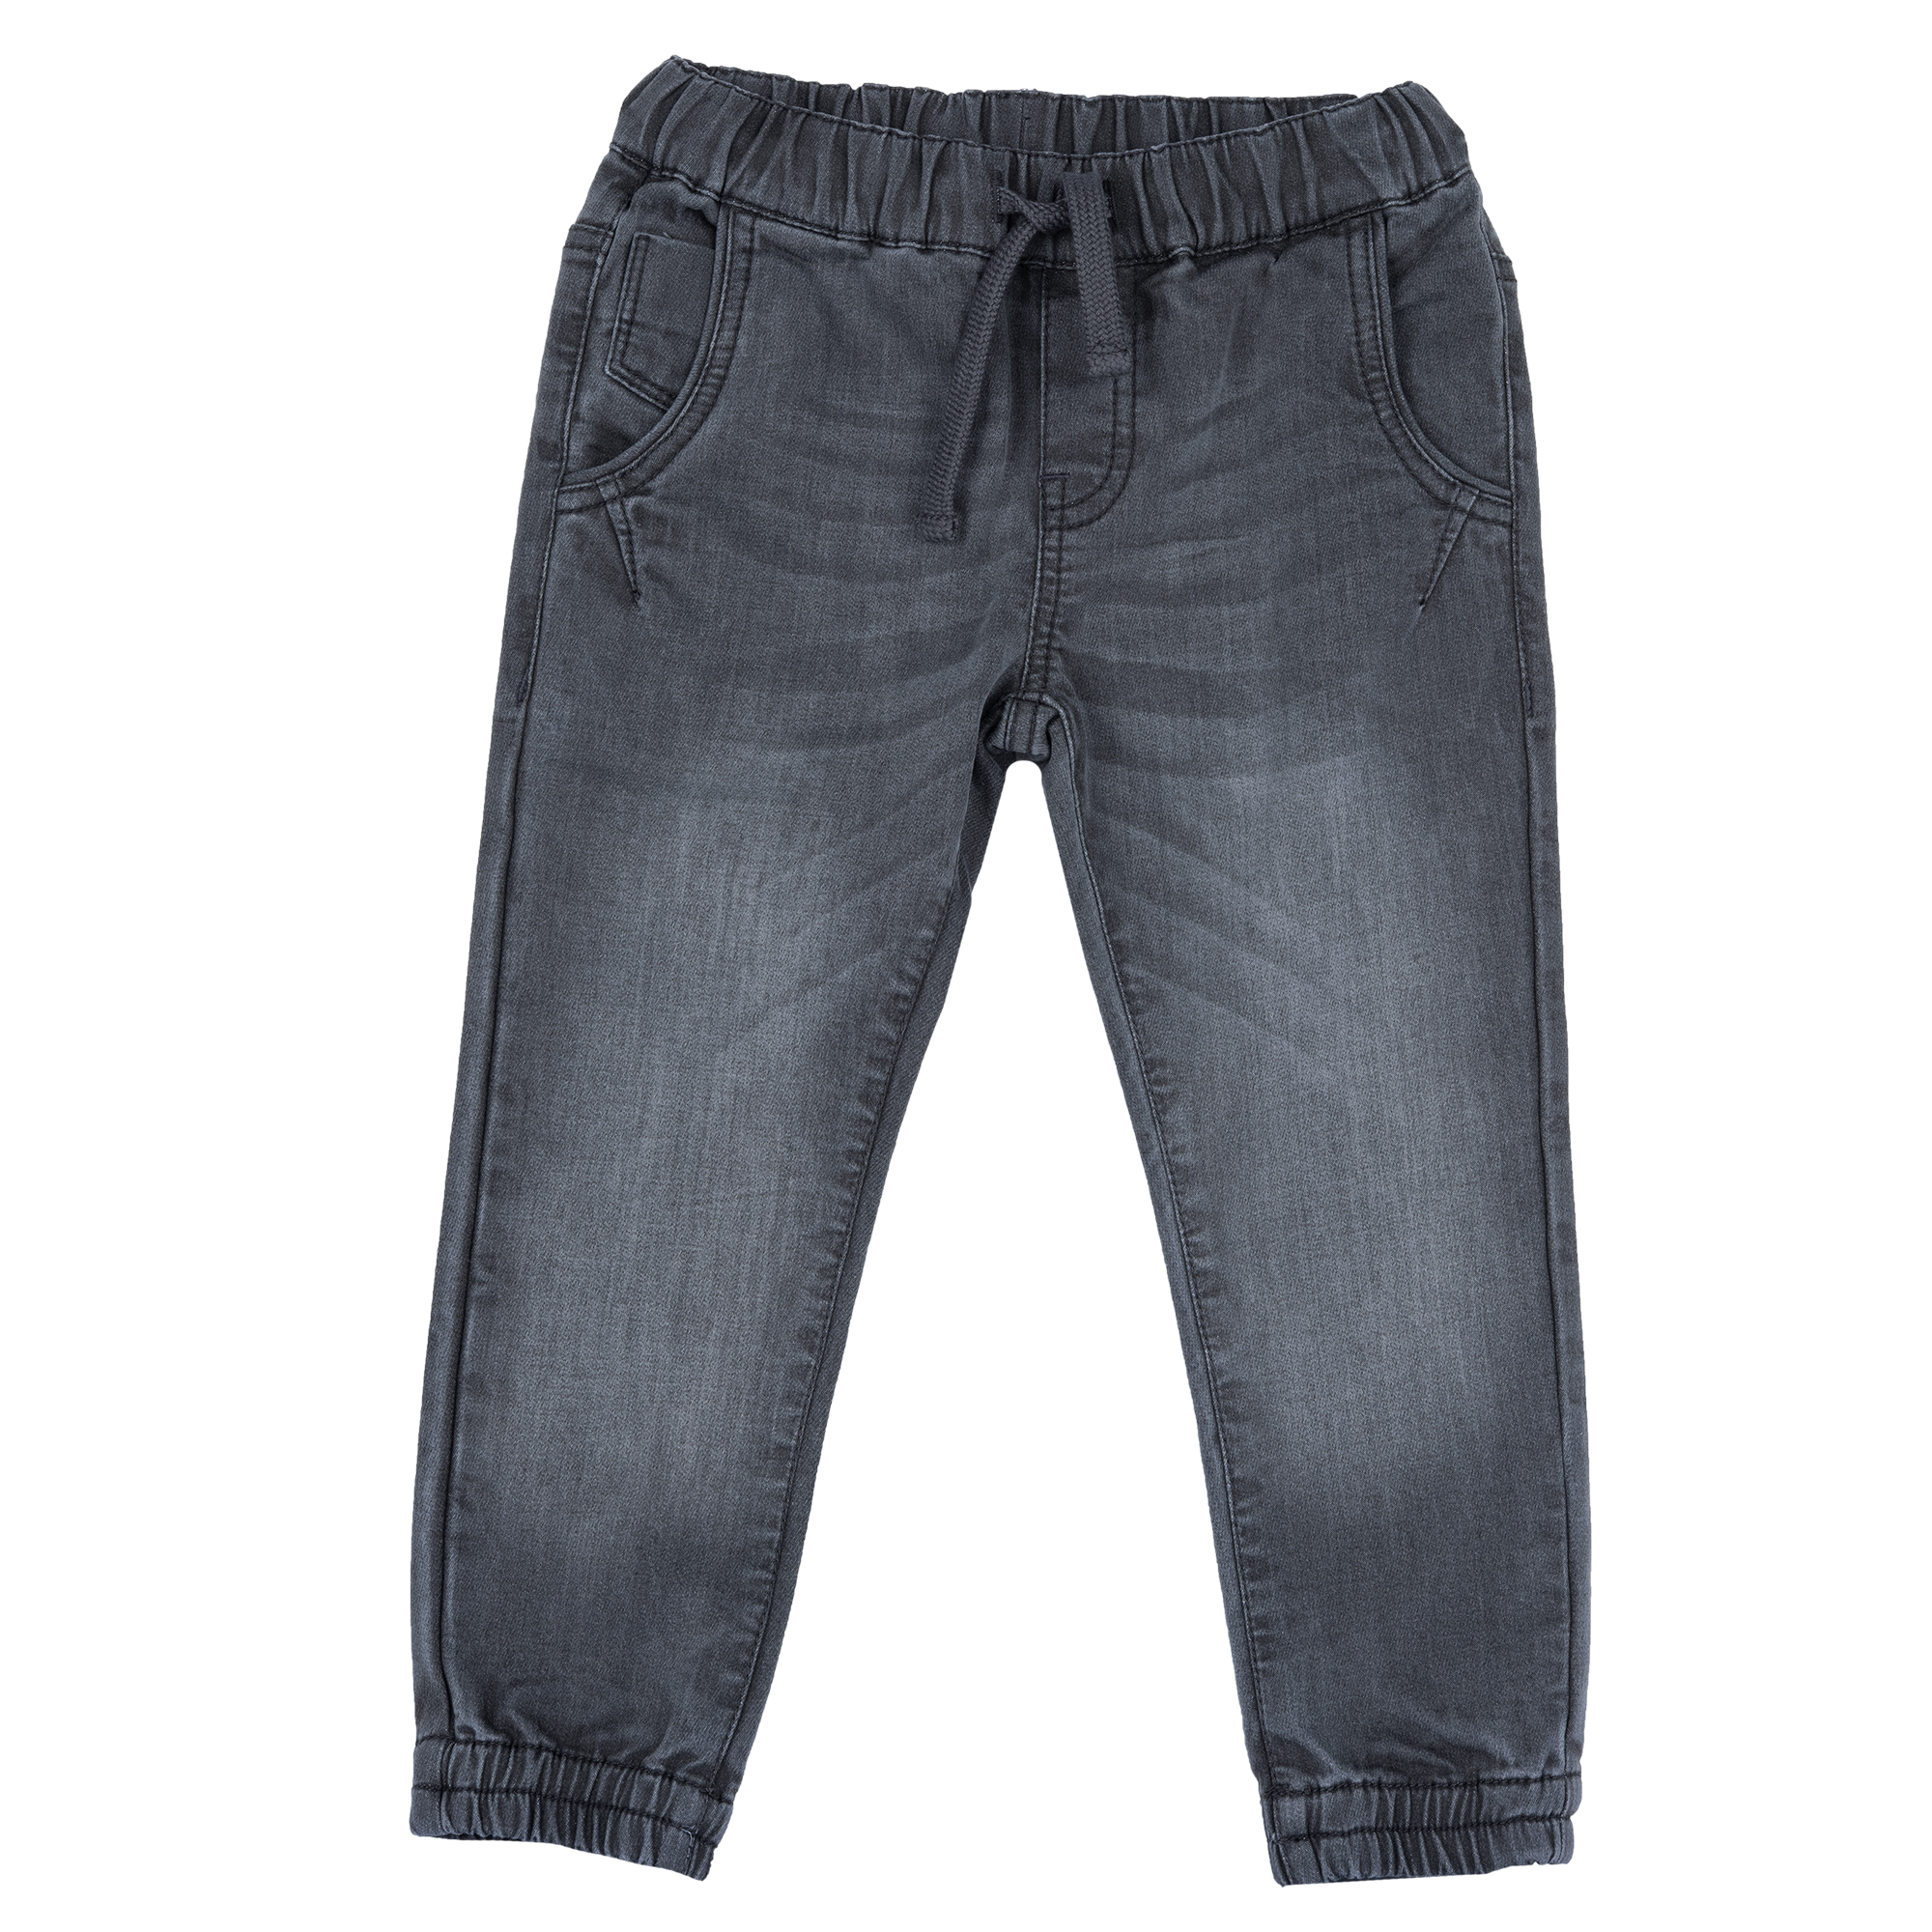 Pantaloni copii Chicco, gri inchis, 08714-63MC 08714-63MC